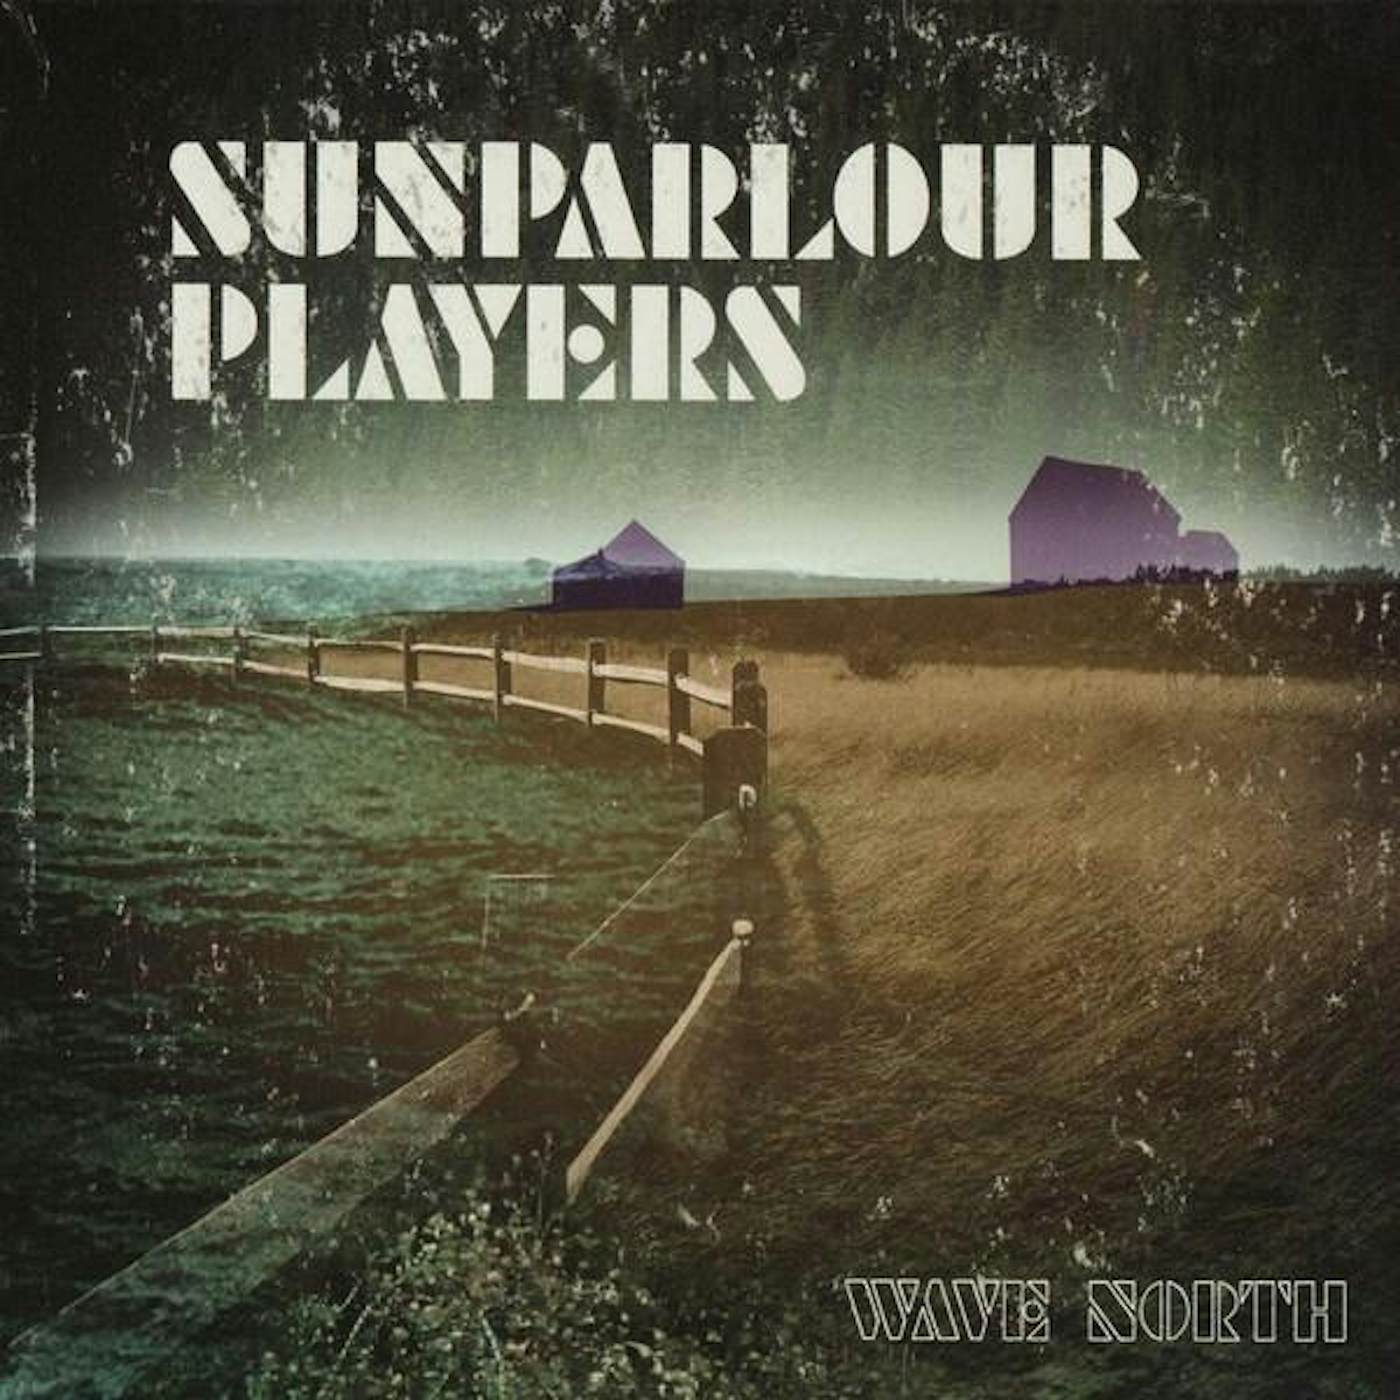 Sunparlour Players / Wave North - LP Vinyl